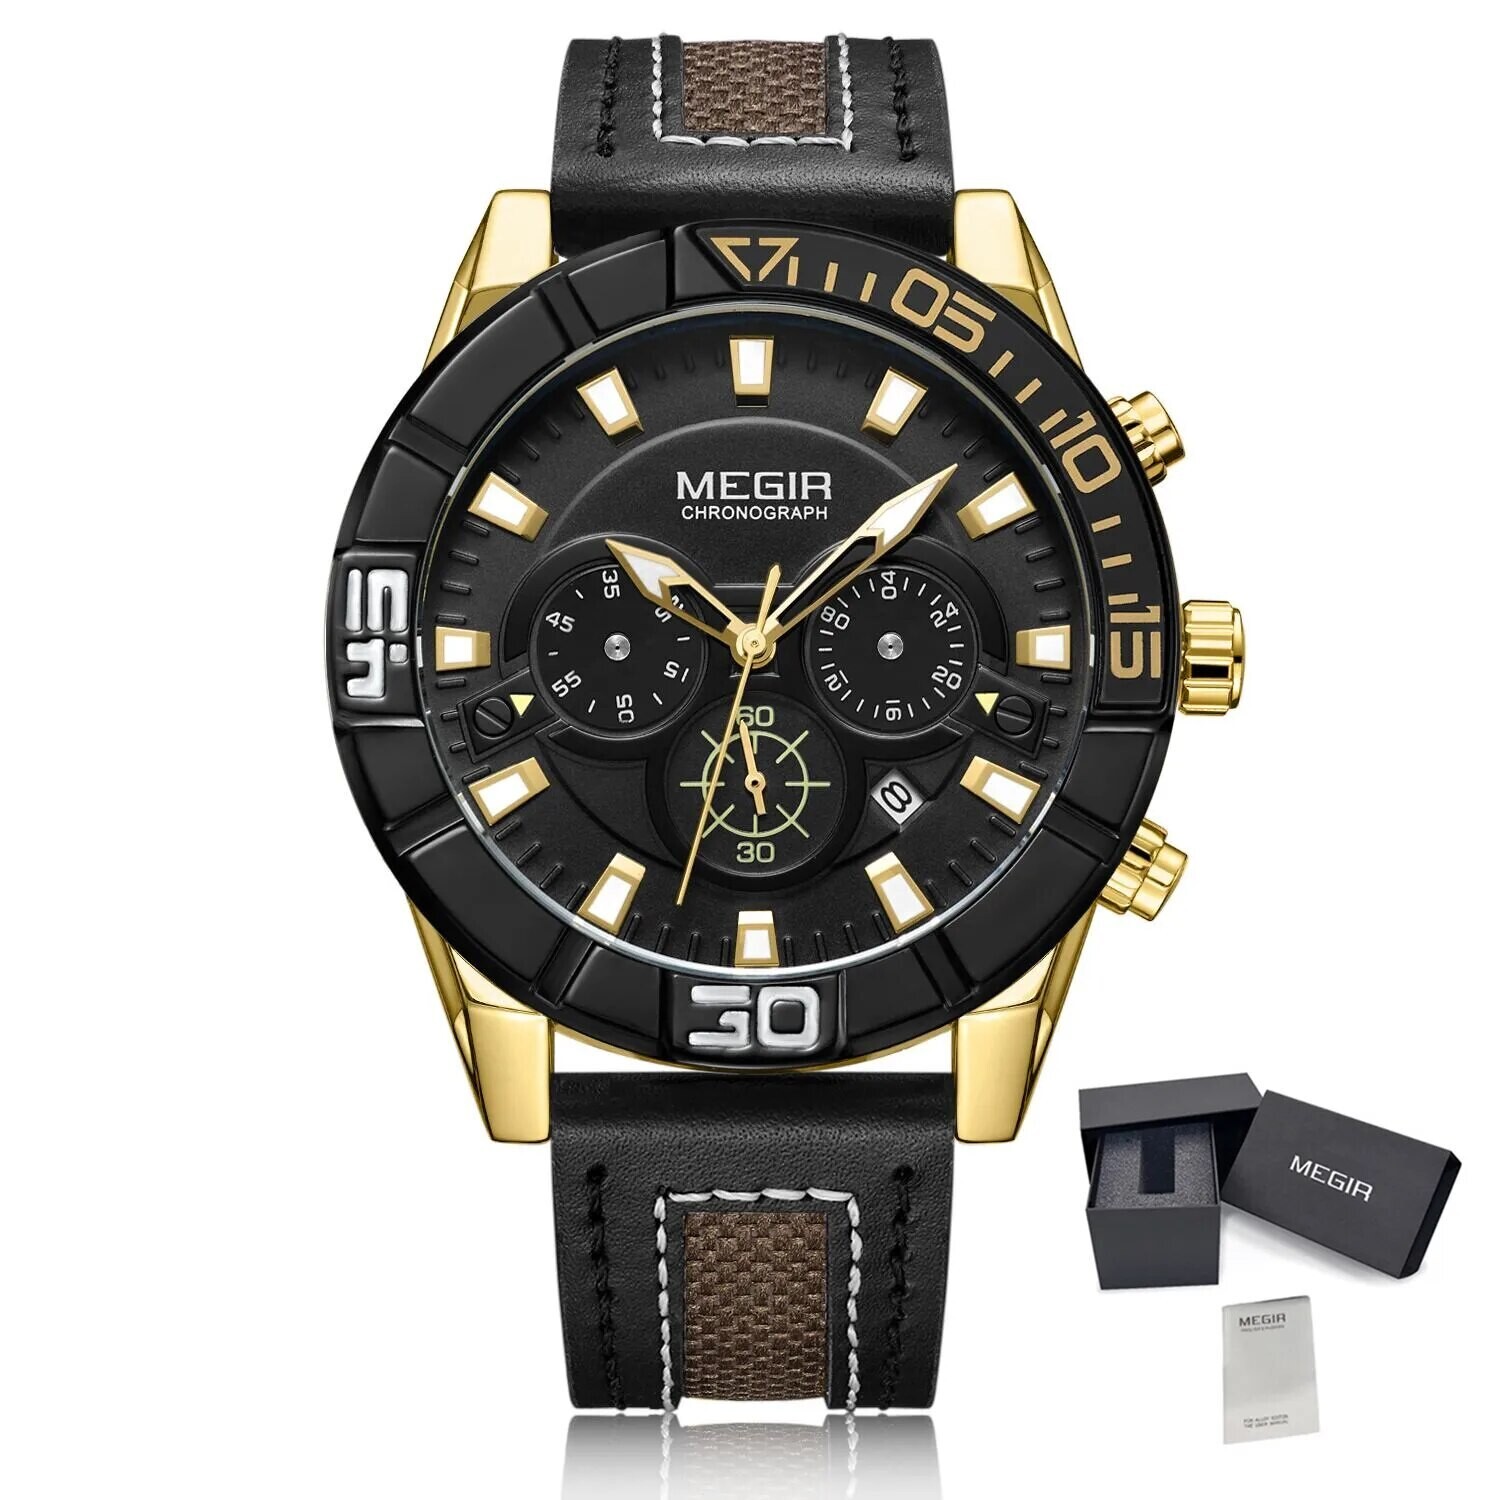 MEGIR Watches for Mens Top Brand Luxury Military Sports Watches Chronograph Leather Waterproof Date Quartz Wristwatch Man Clock, Color: Gold Black